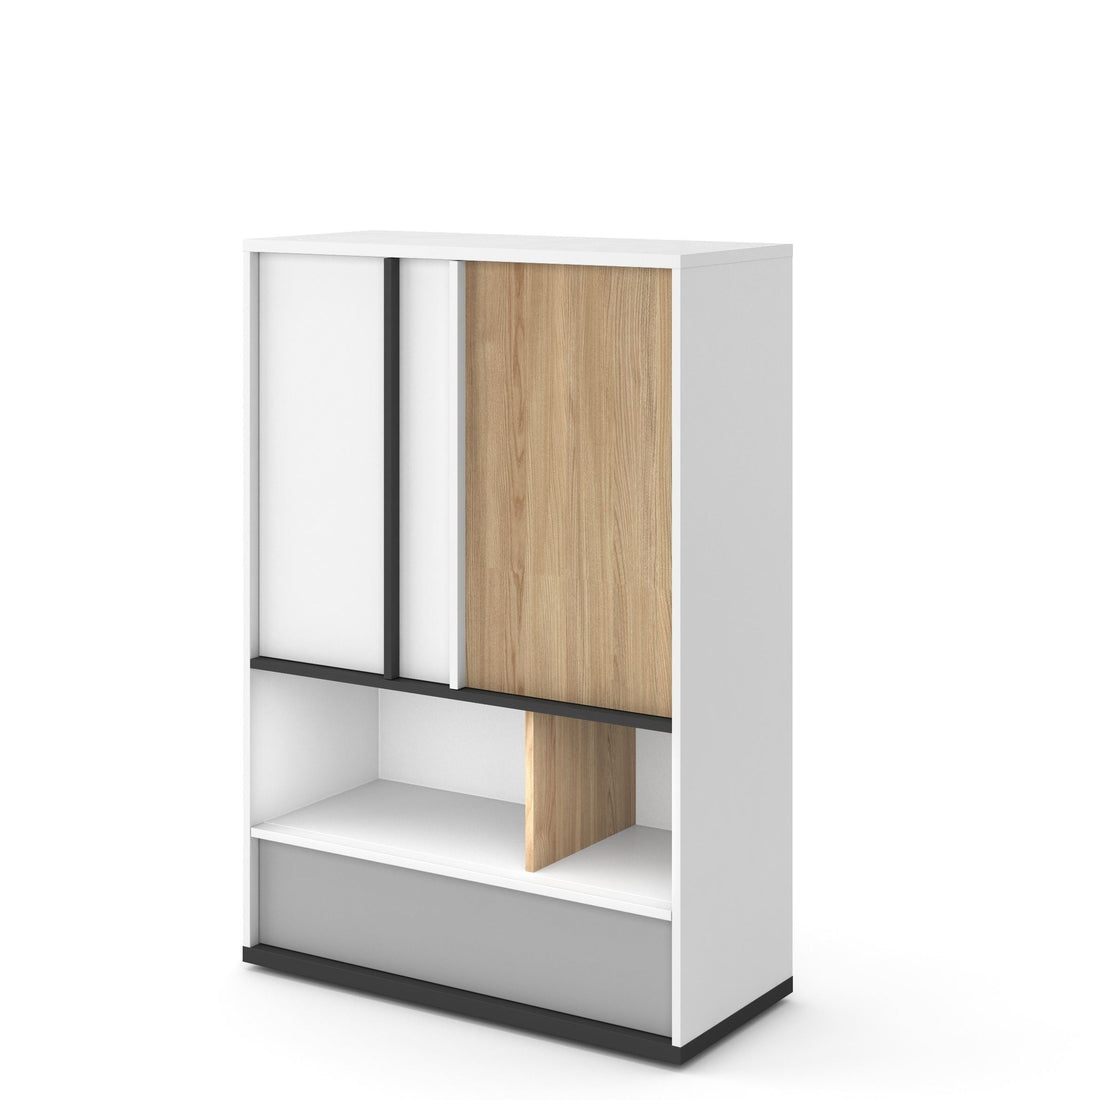 Imola IM-05 Sideboard Cabinet - £180.0 - Kids Sideboard Cabinet 